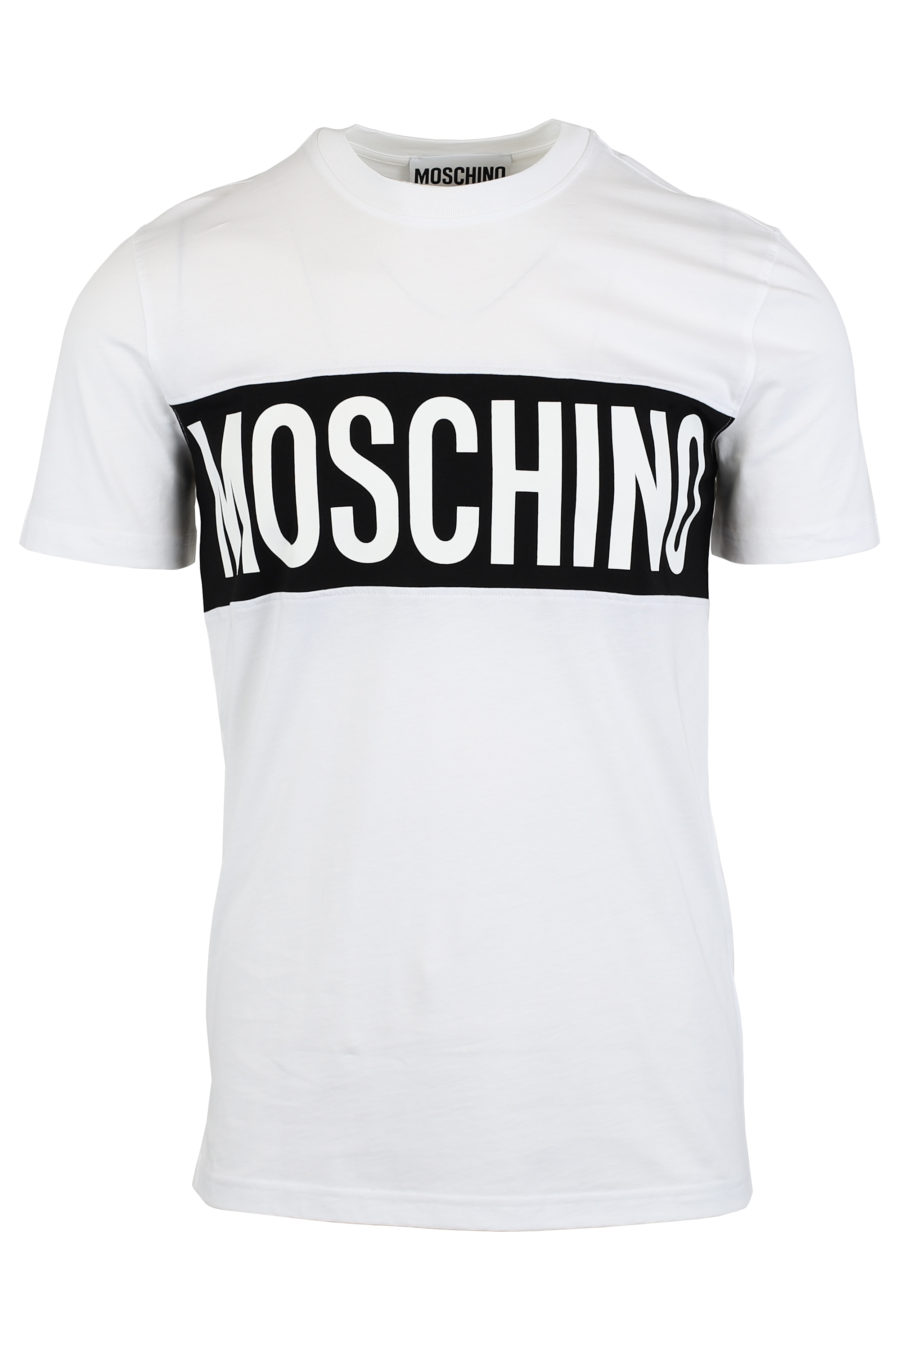 Camiseta blanca logo blanco y negro - IMG 0878